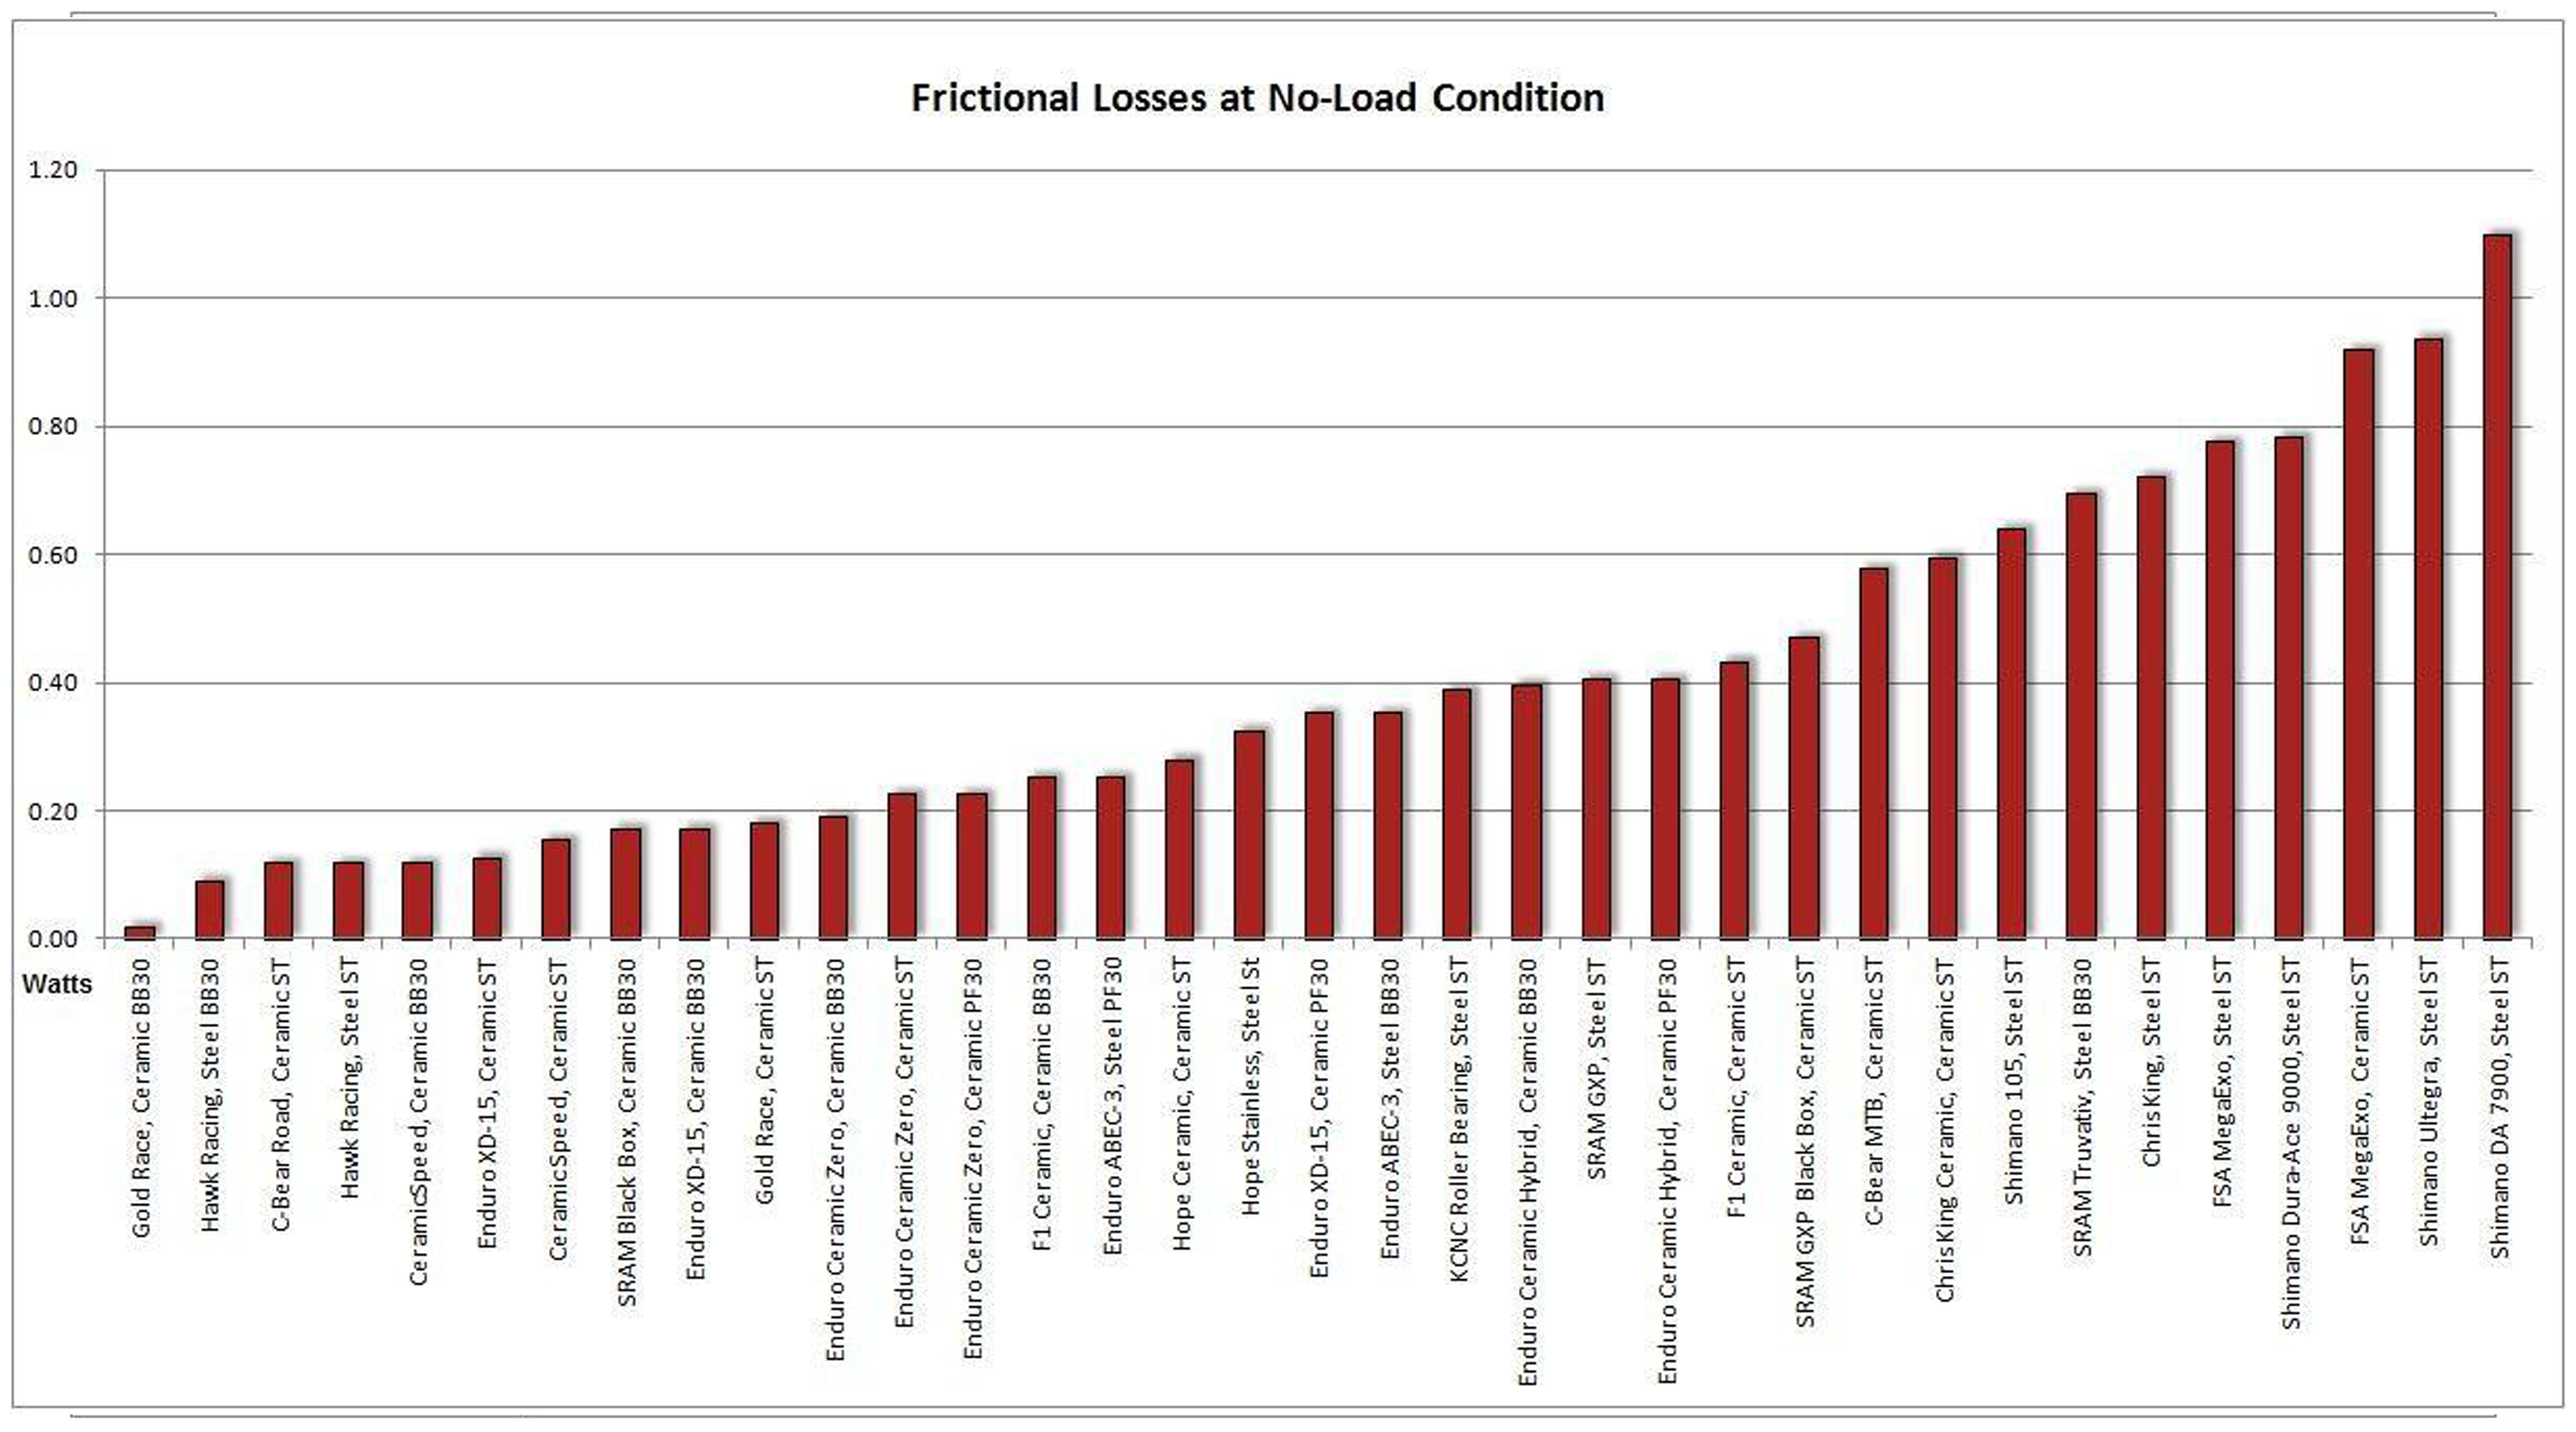 Frictional Losses at No-Load Condition